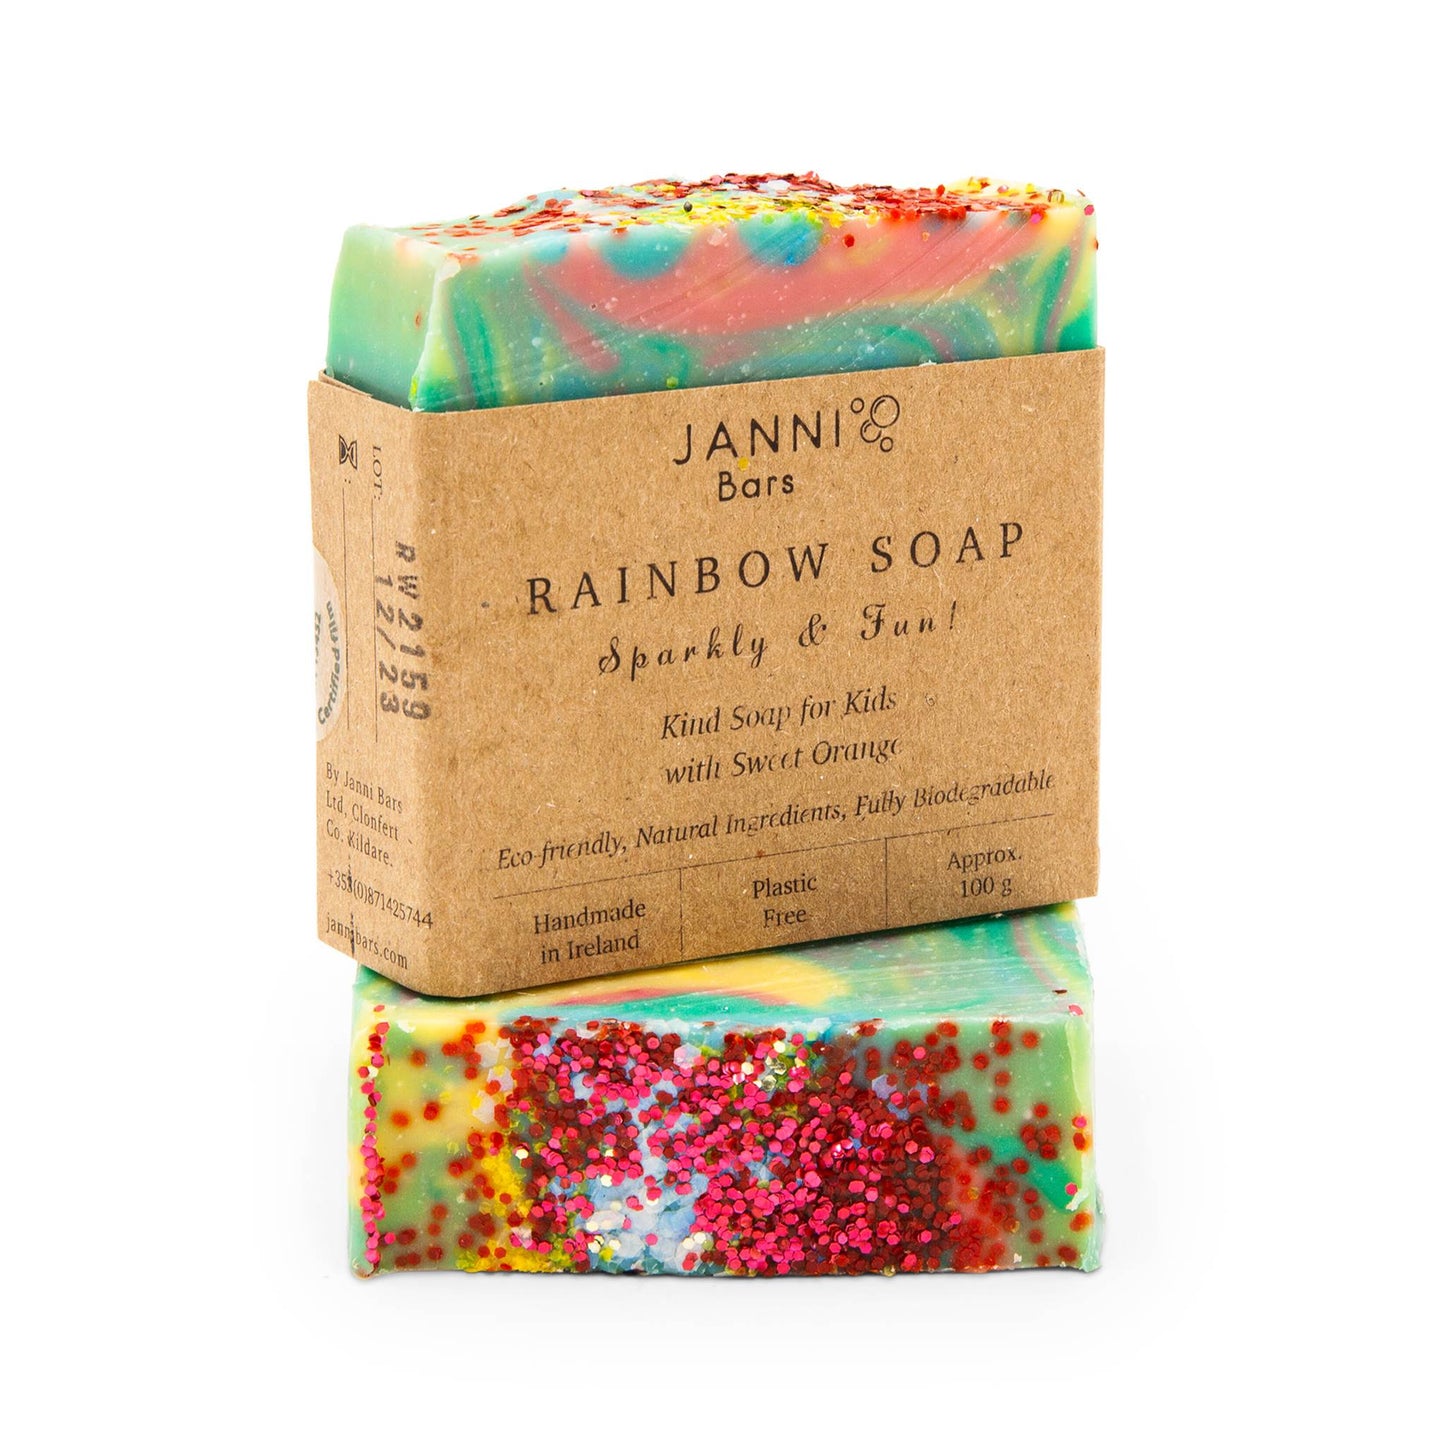 Janni Bars Soap Janni Bars Cold Pressed Soap - Rainbow Soap